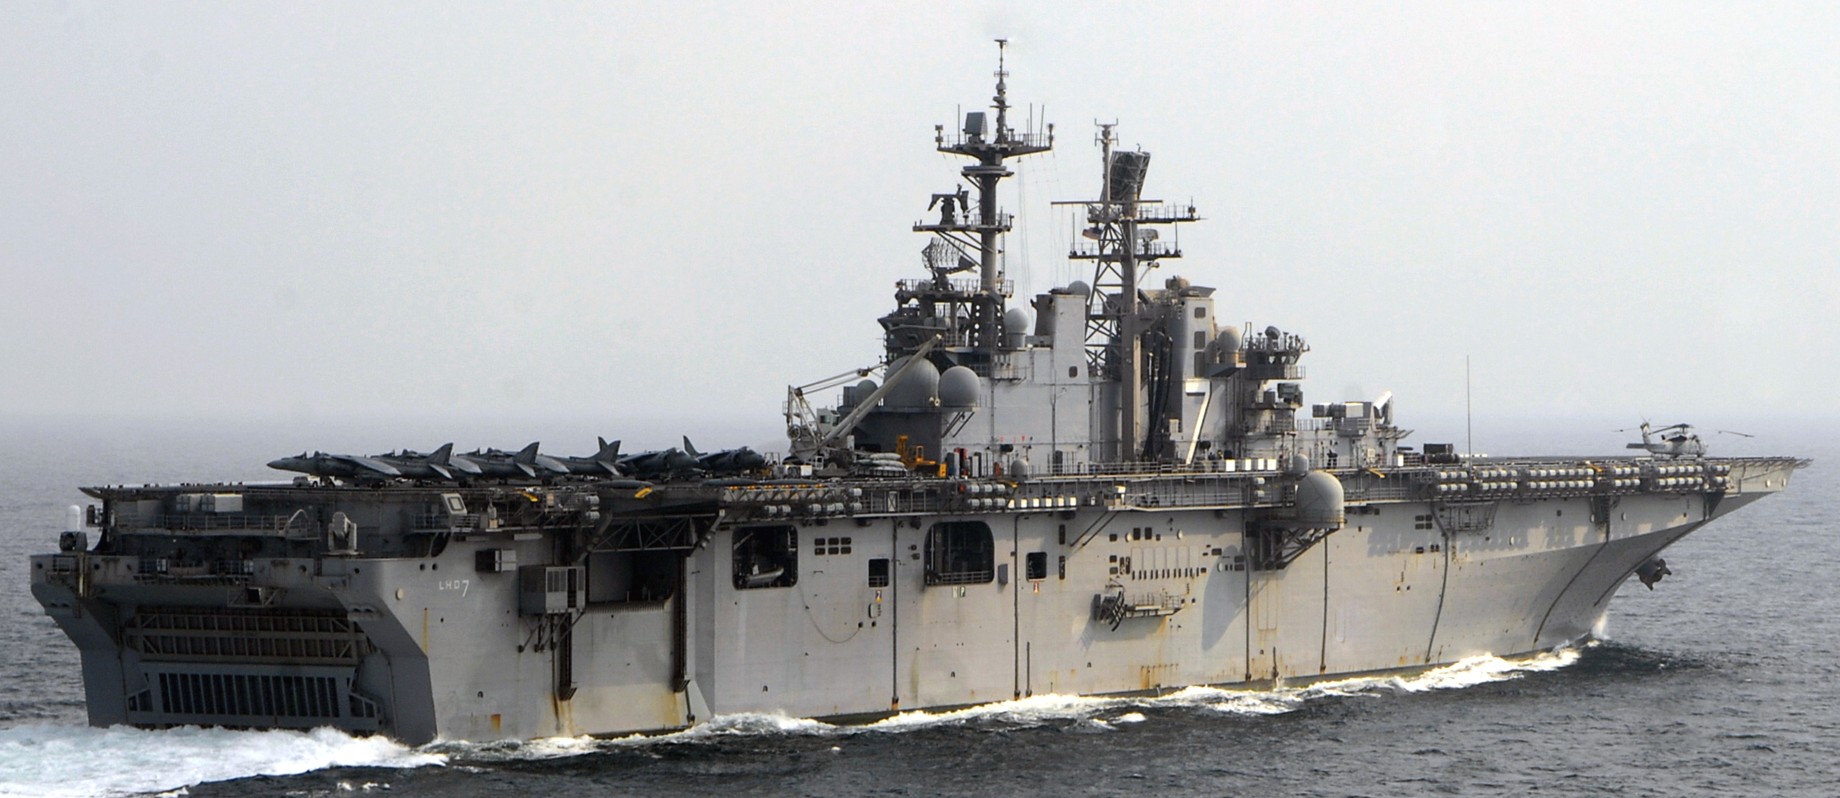 lhd-7 uss iwo jima wasp class amphibious assault ship dock landing helicopter us navy hmm-264 marines persian gulf 63